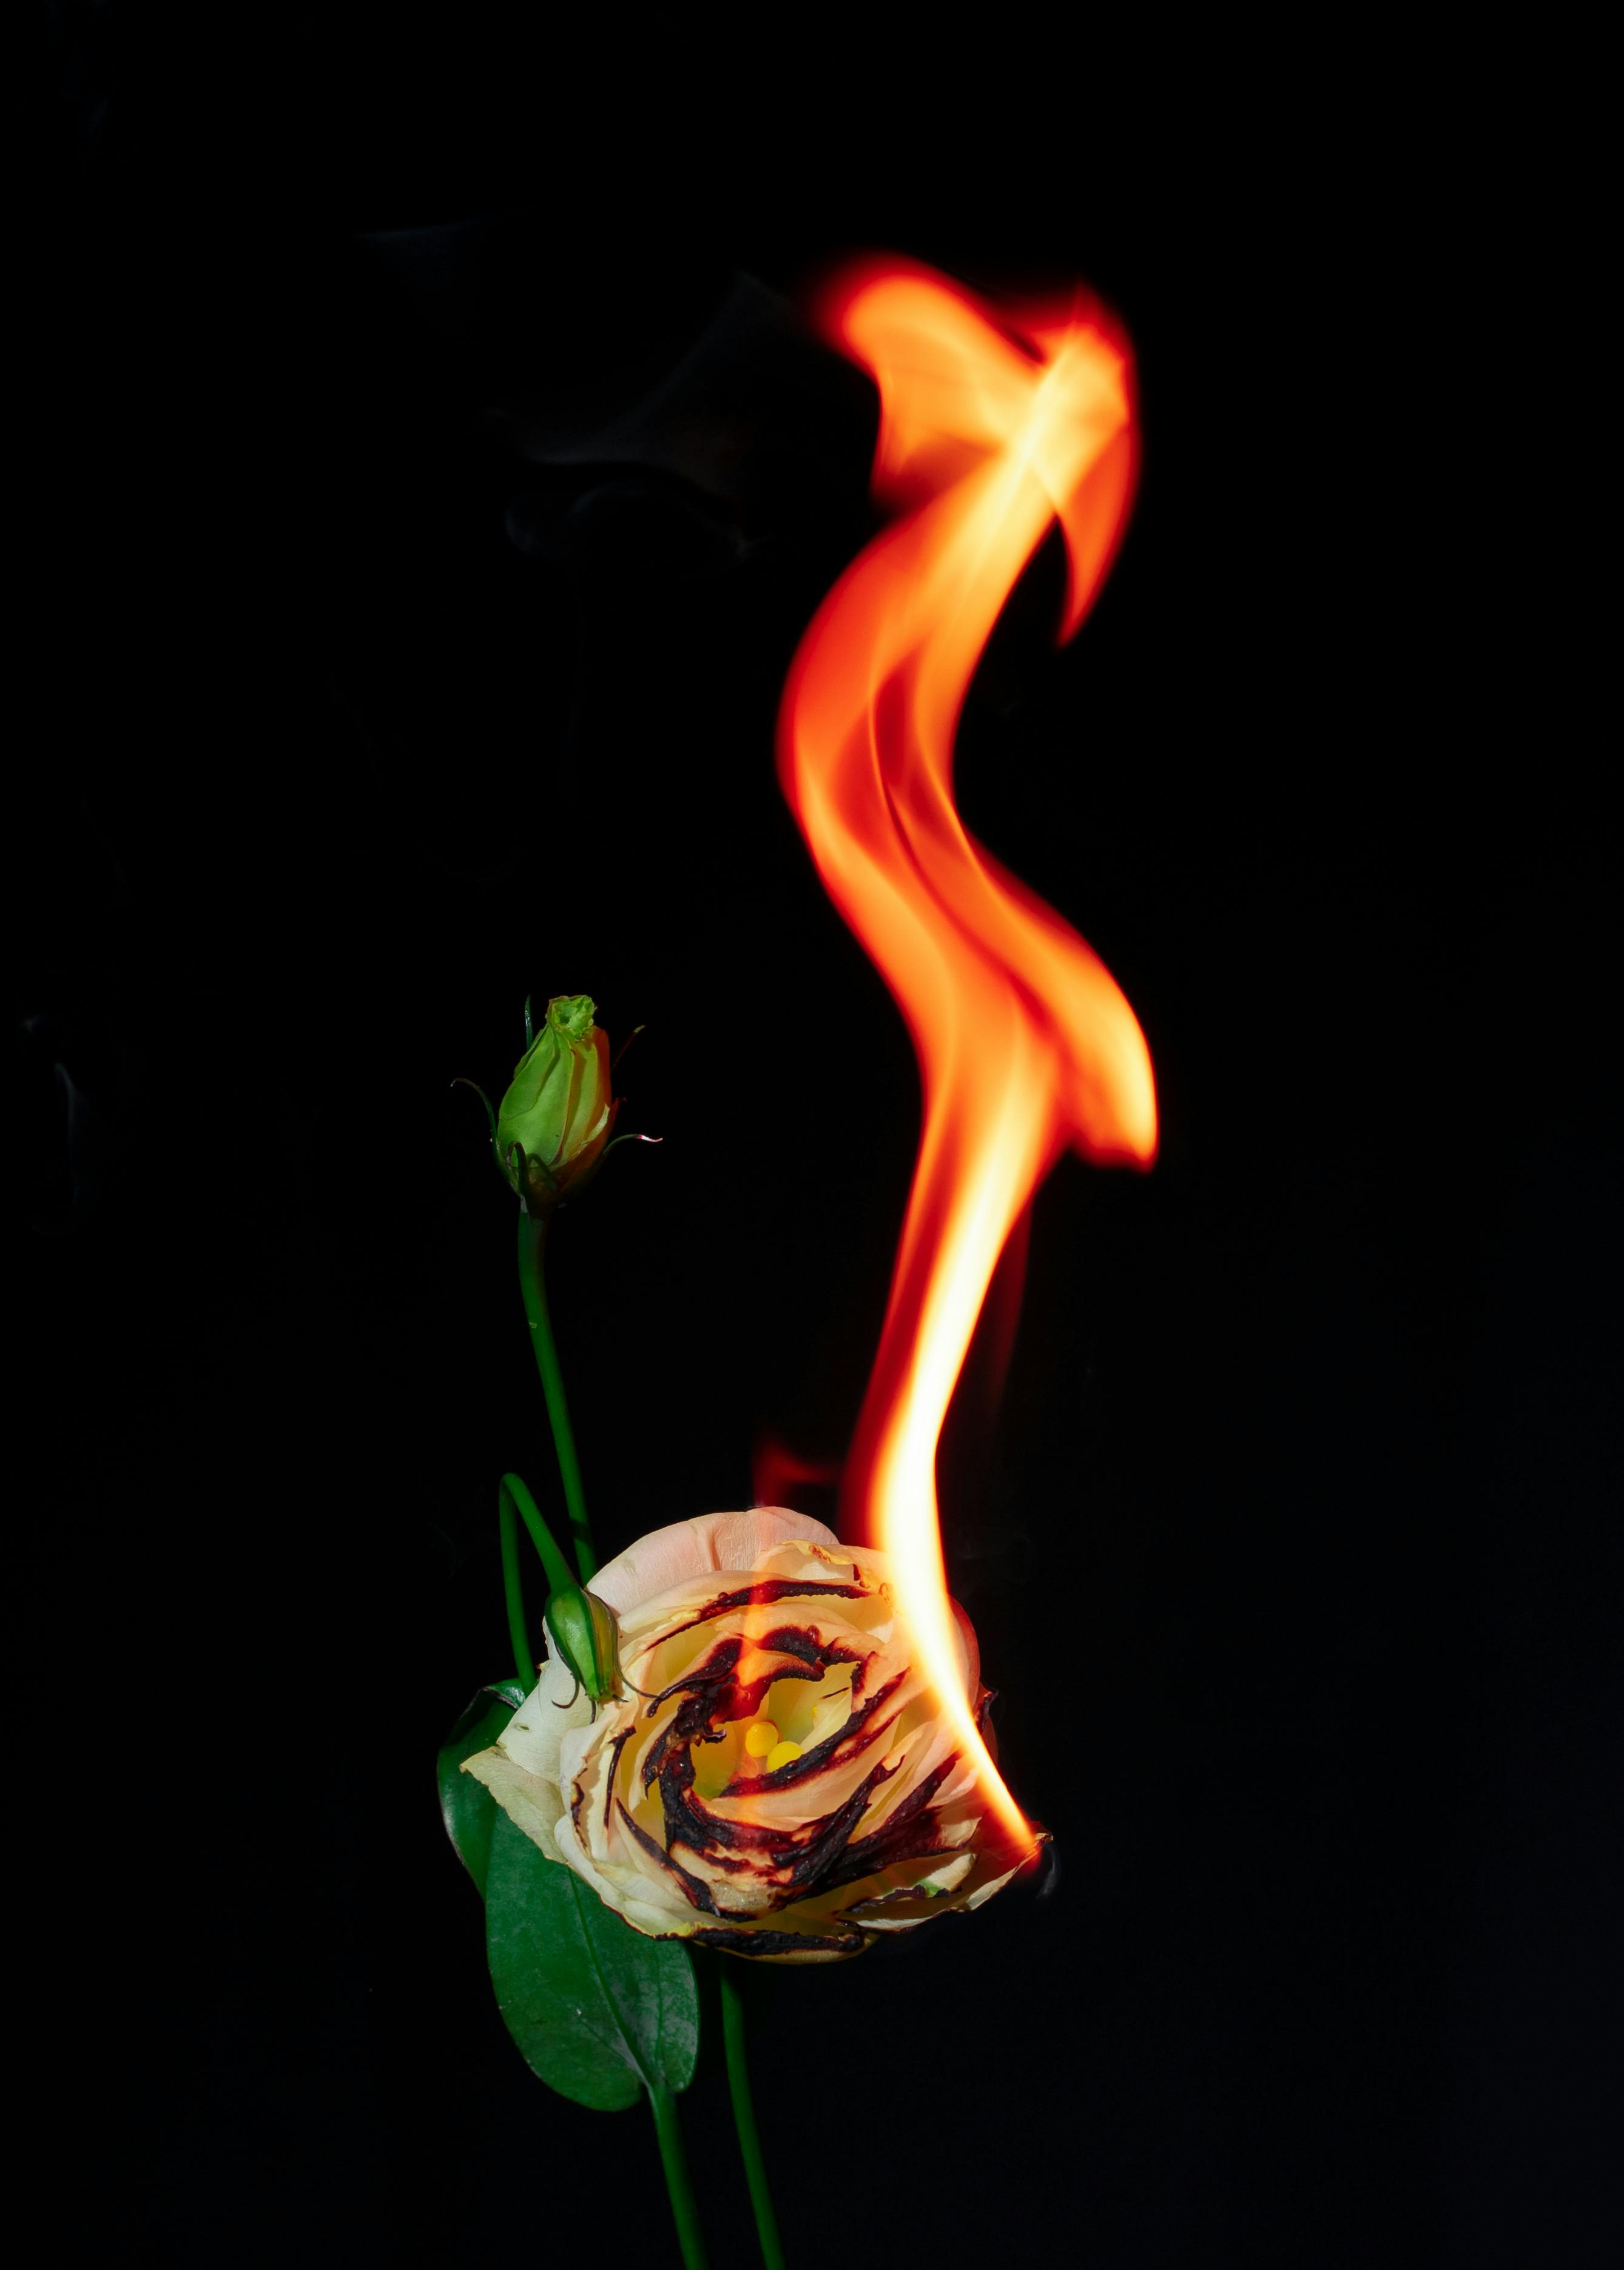 Burning rose inspiration tatoo #procreate #timelapse #creatif #foryou |  TikTok